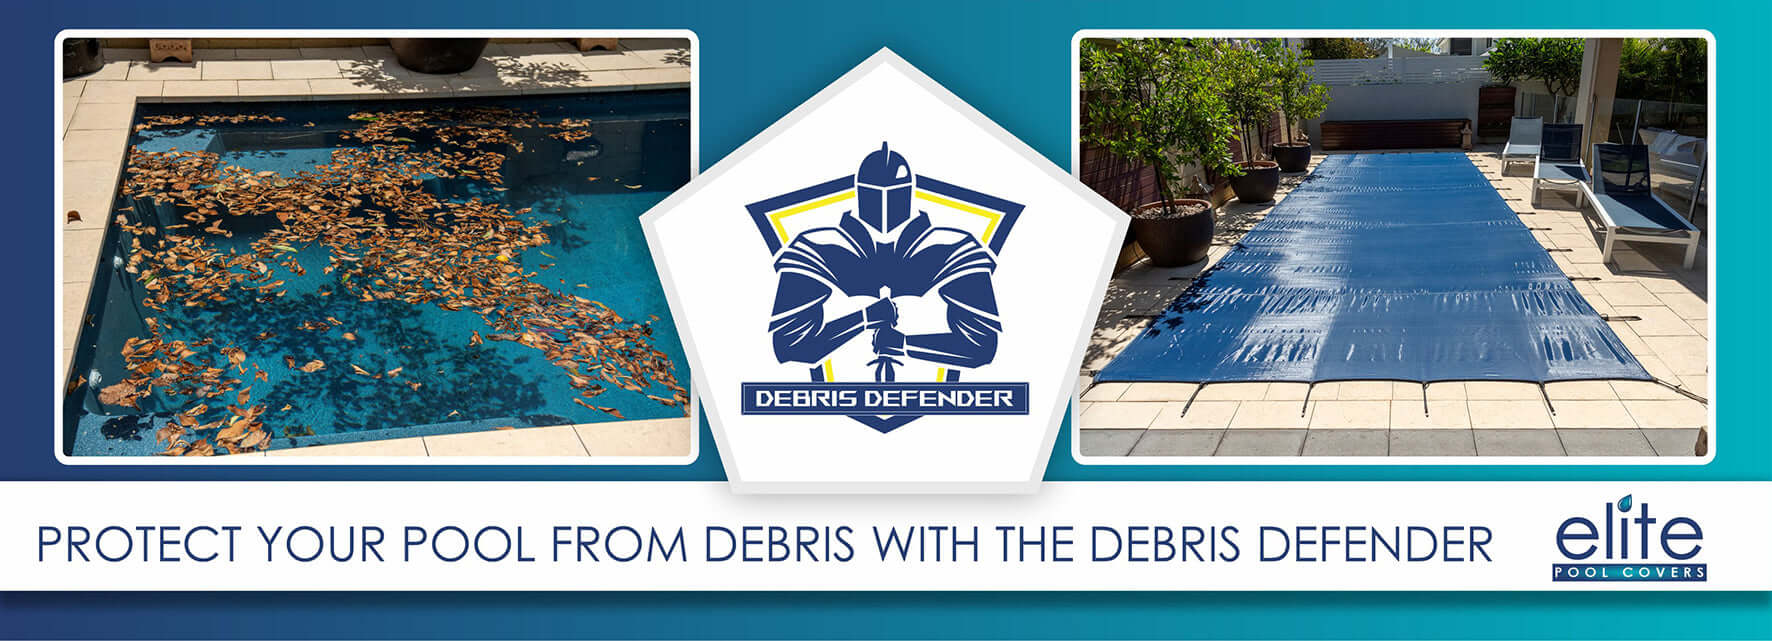 slideshow image showing the Debris defender pool cover